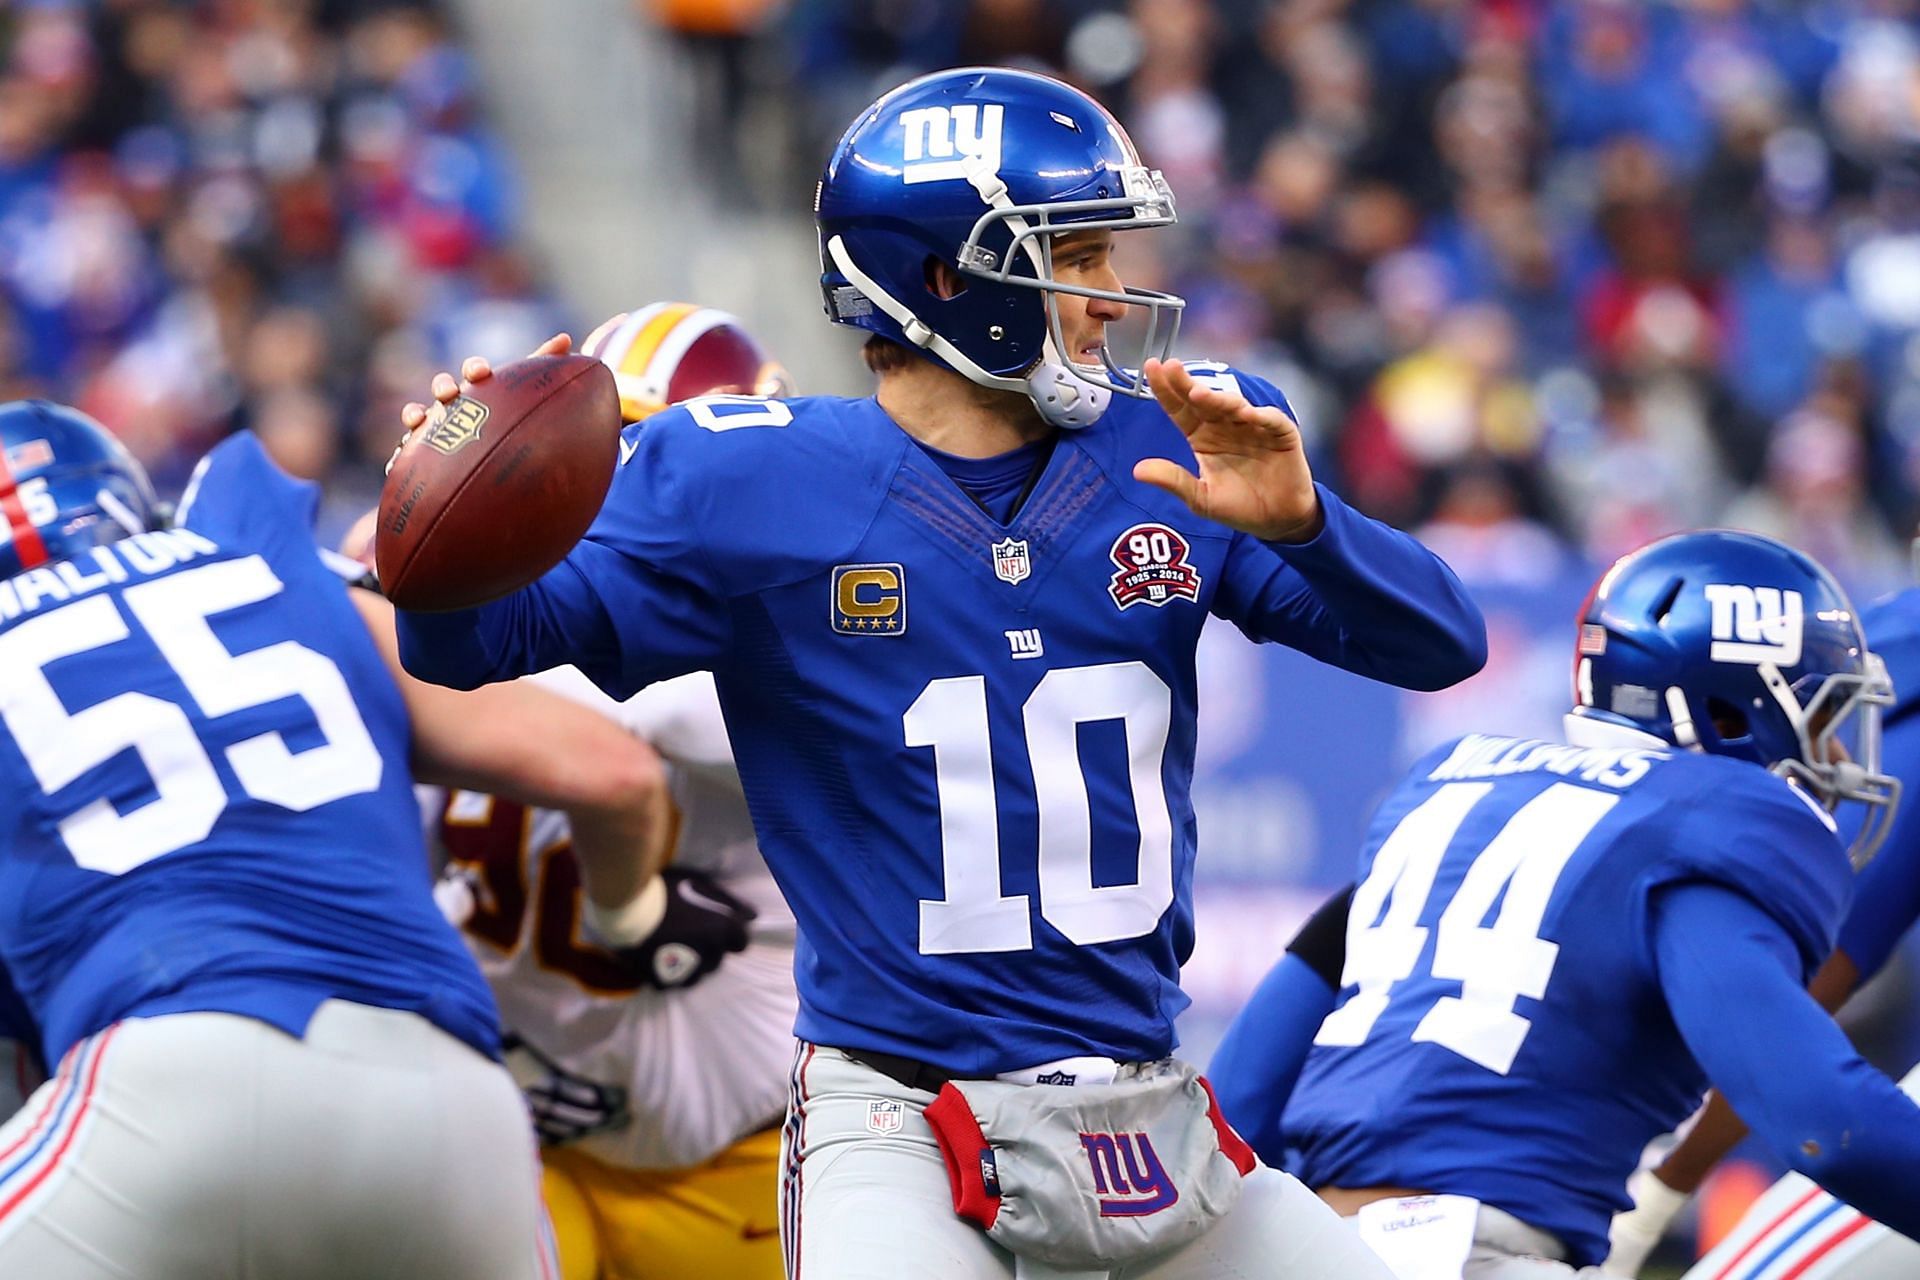 Former New York Giants quarterback Eli Manning pulls back to pass